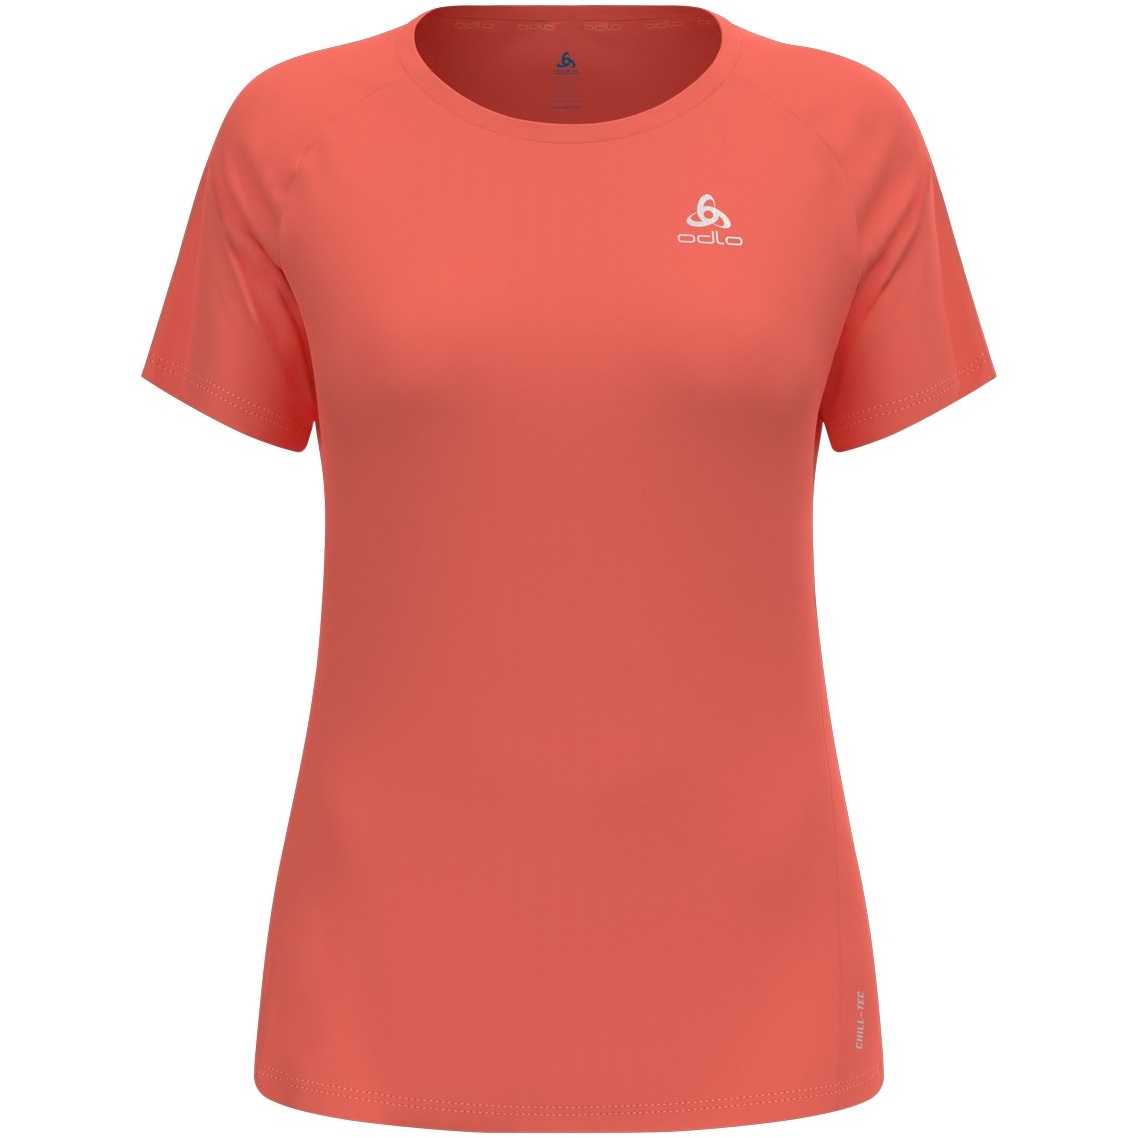 Odlo Essentials Chill-Tec Running Shirt Women - living coral